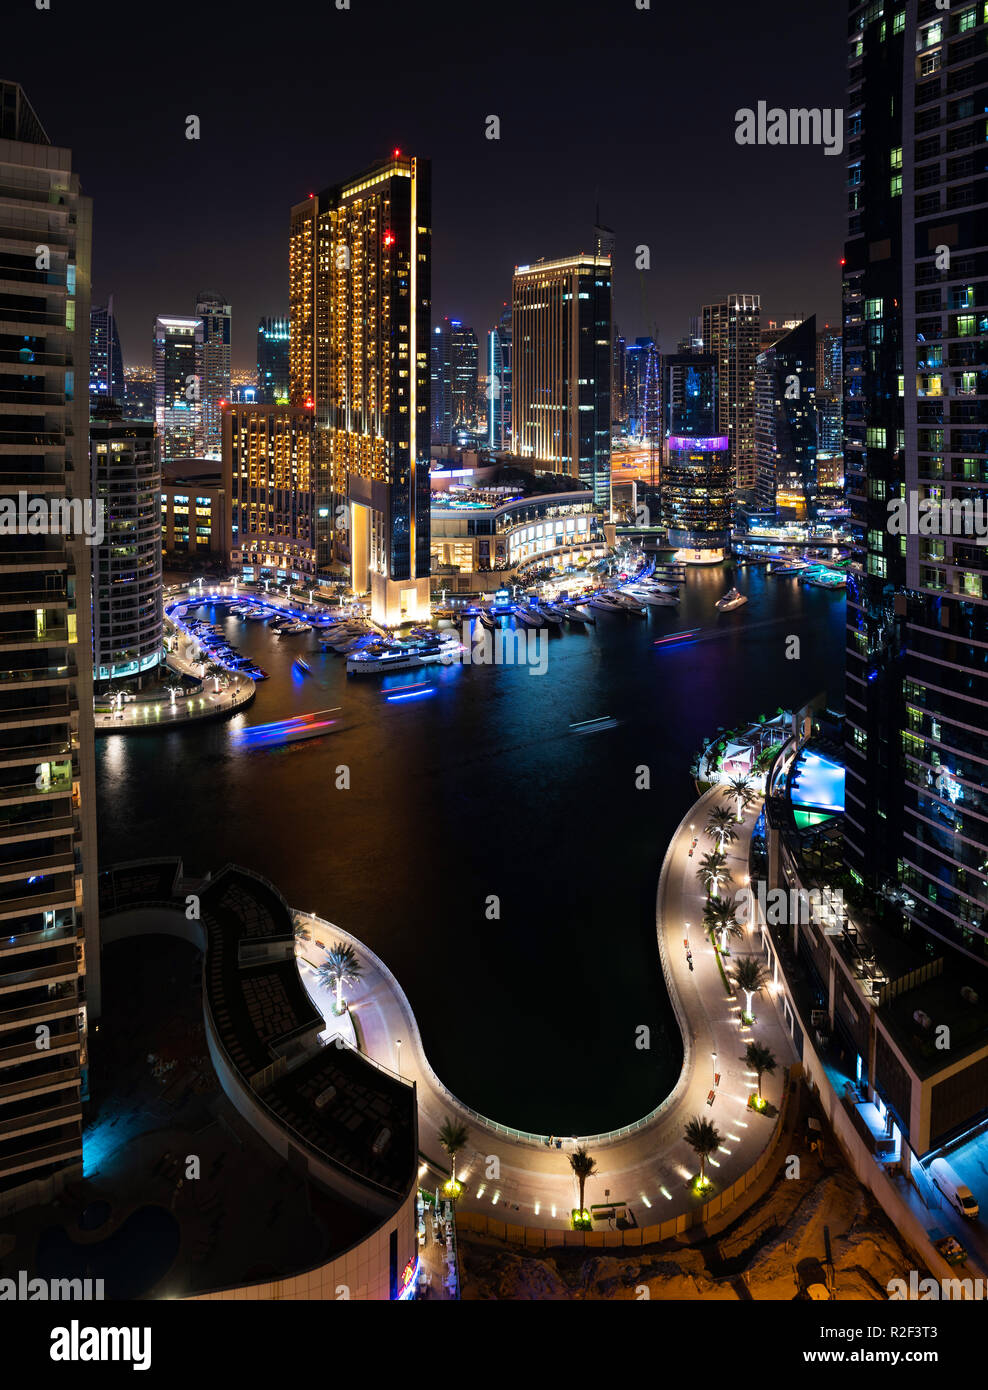 Dubai, United Arab Emirates - November 16, 2018: Dubai Marina night view of modern architecture and luxuries environment of famous travel destination  Stock Photo